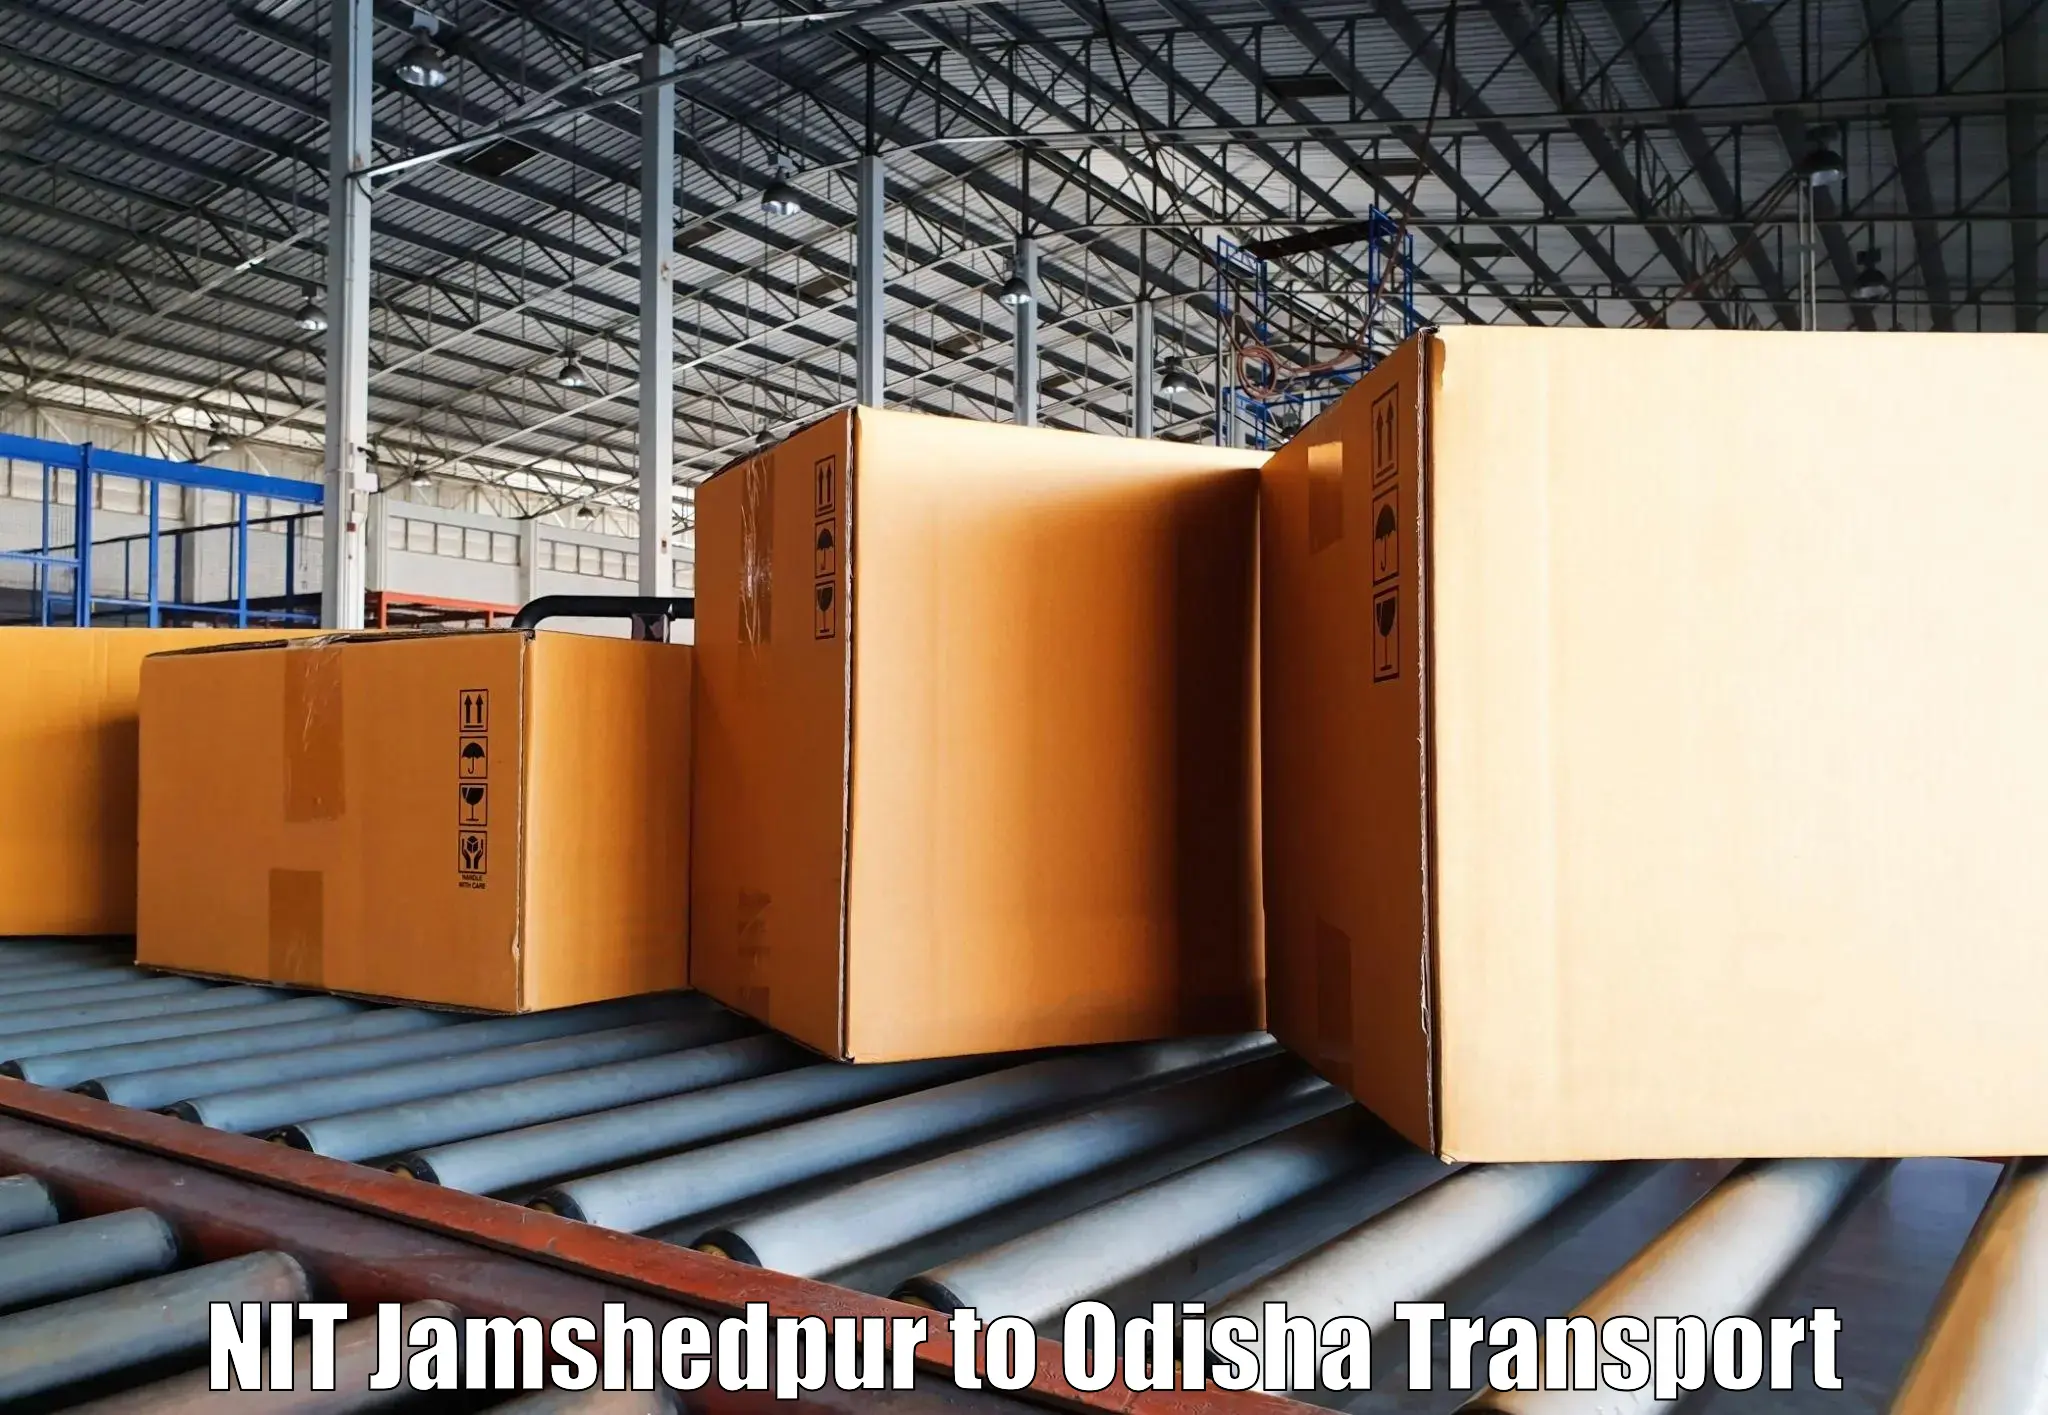 Express transport services NIT Jamshedpur to Chandbali